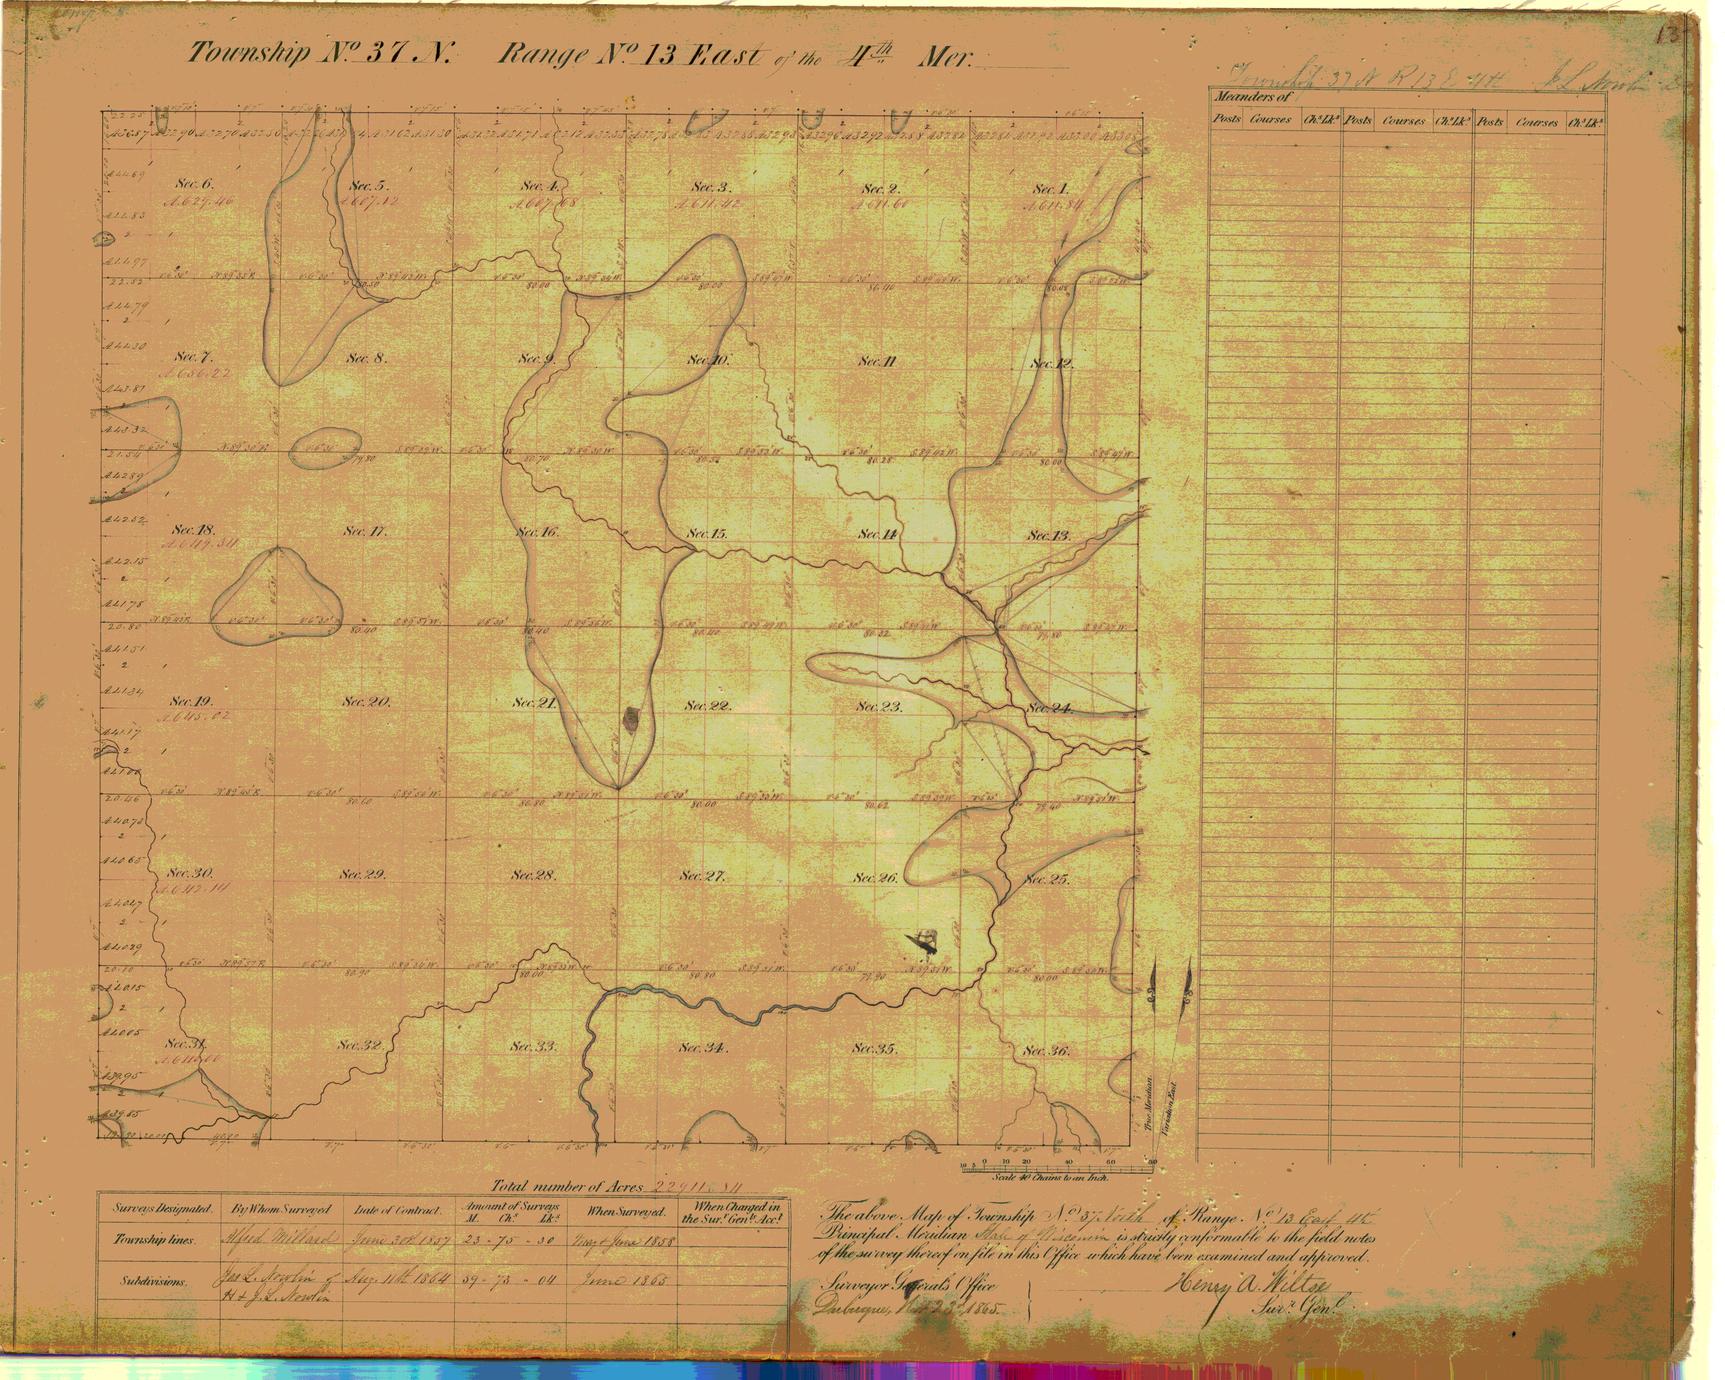 [Public Land Survey System map: Wisconsin Township 37 North, Range 13 East]